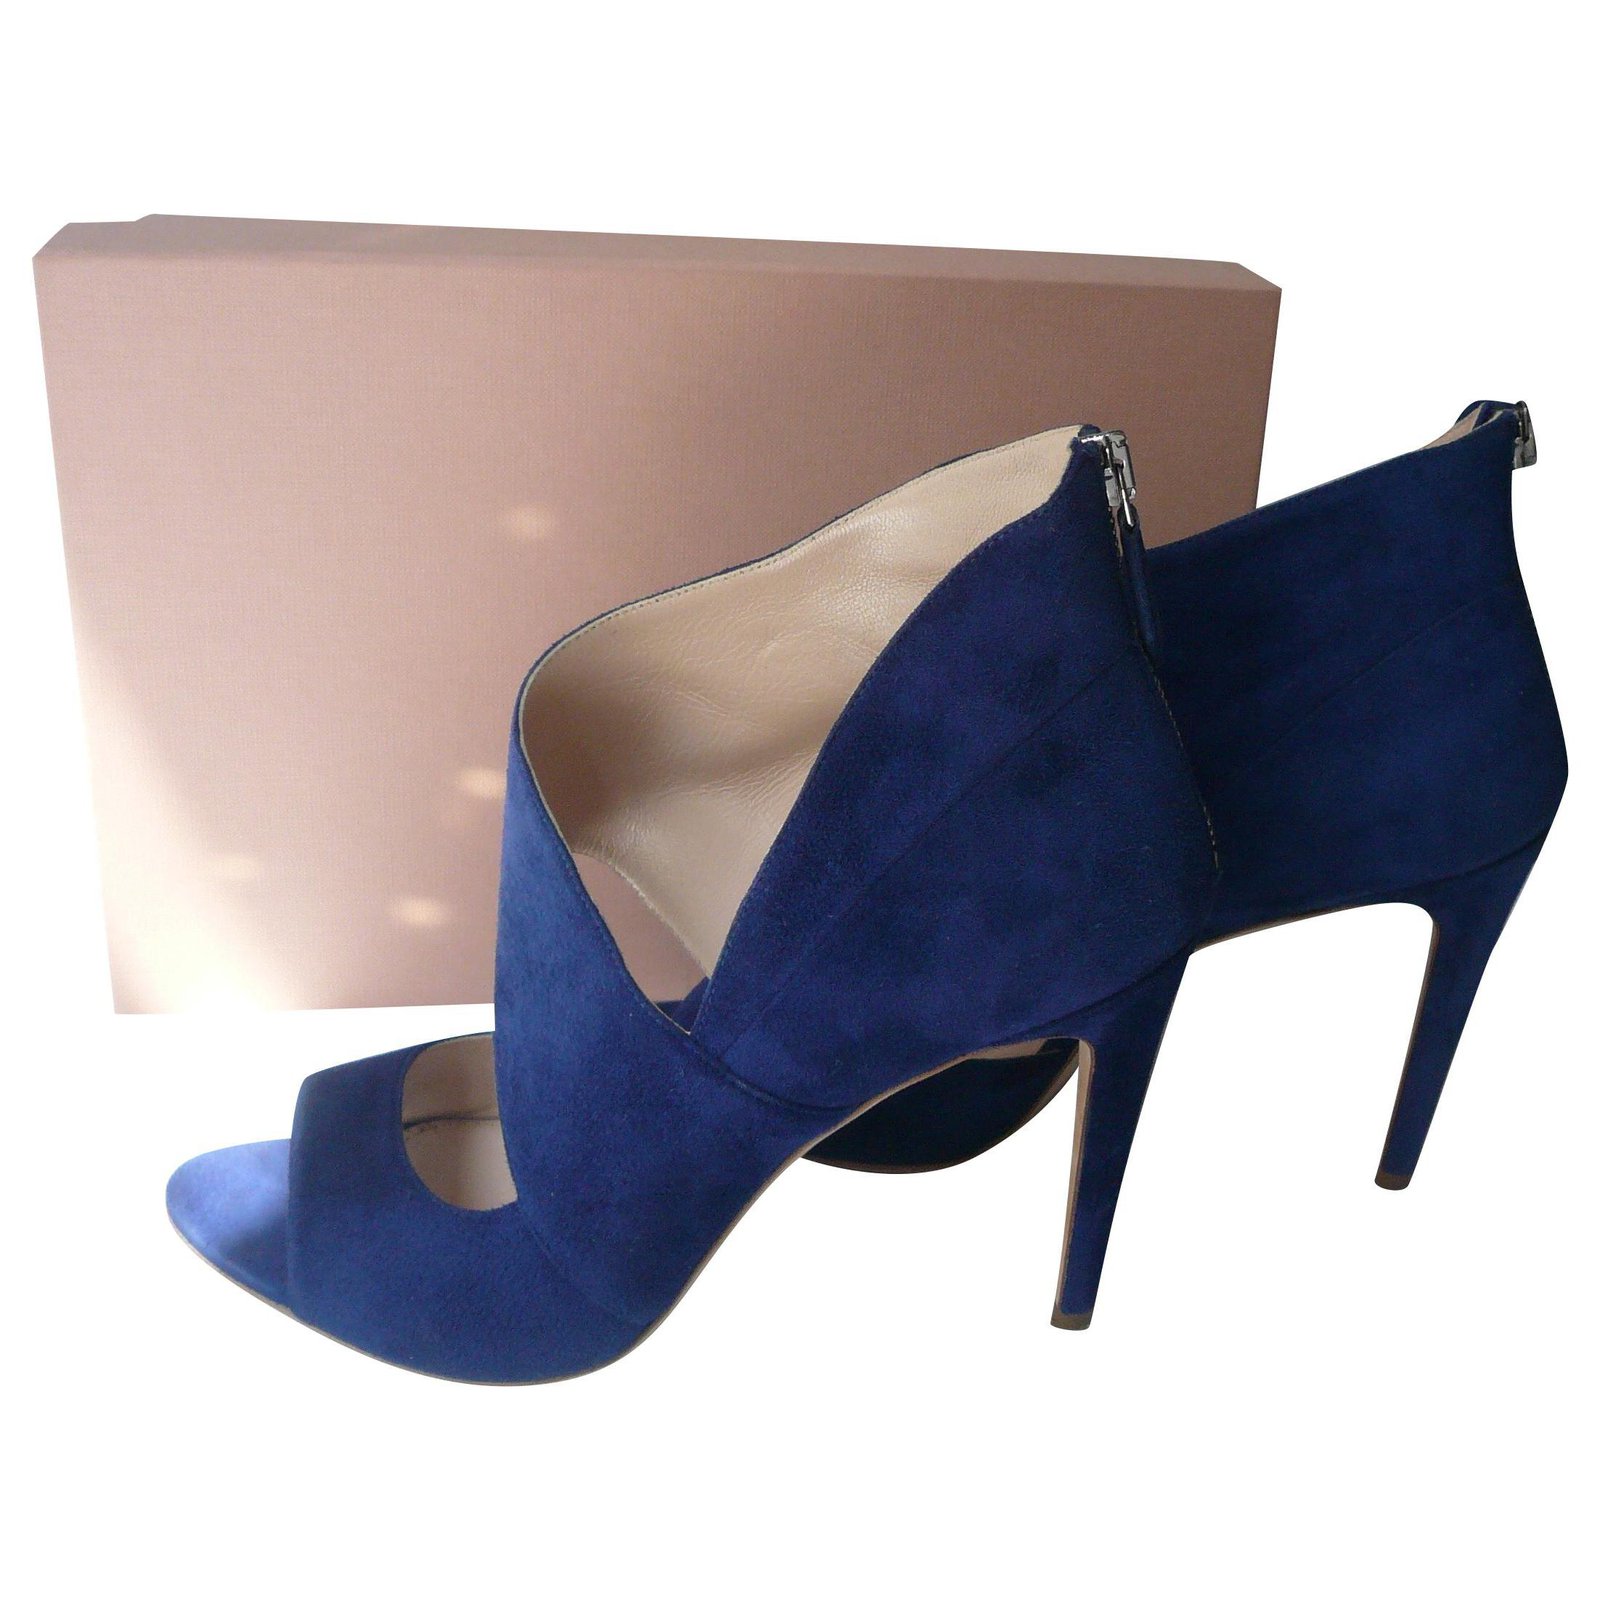 blue suede high heel shoes